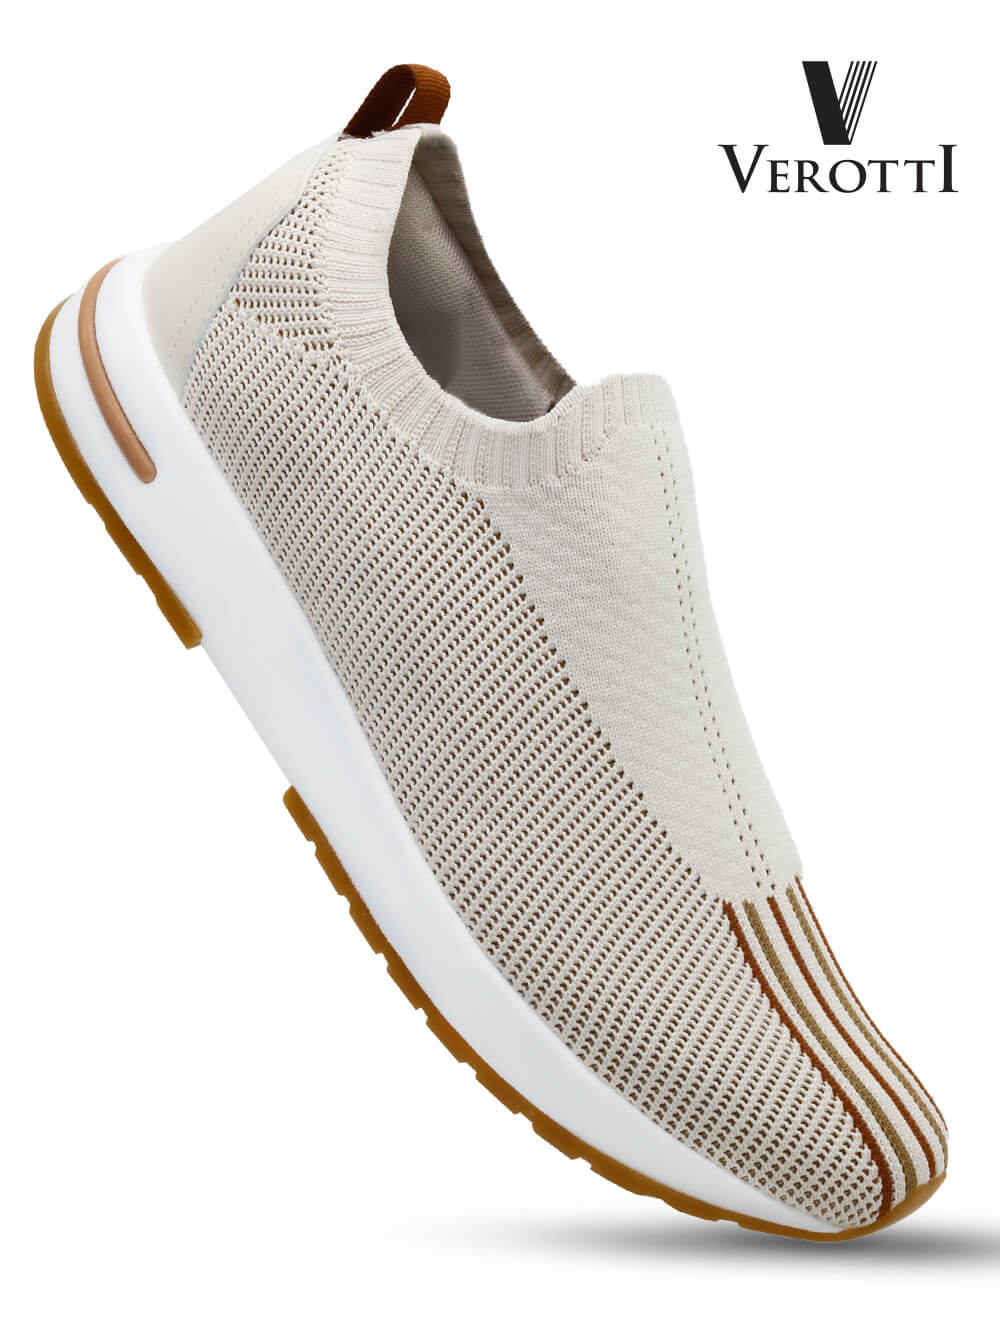 Verotti[X342]922-Beige-Gents-Shoes-40